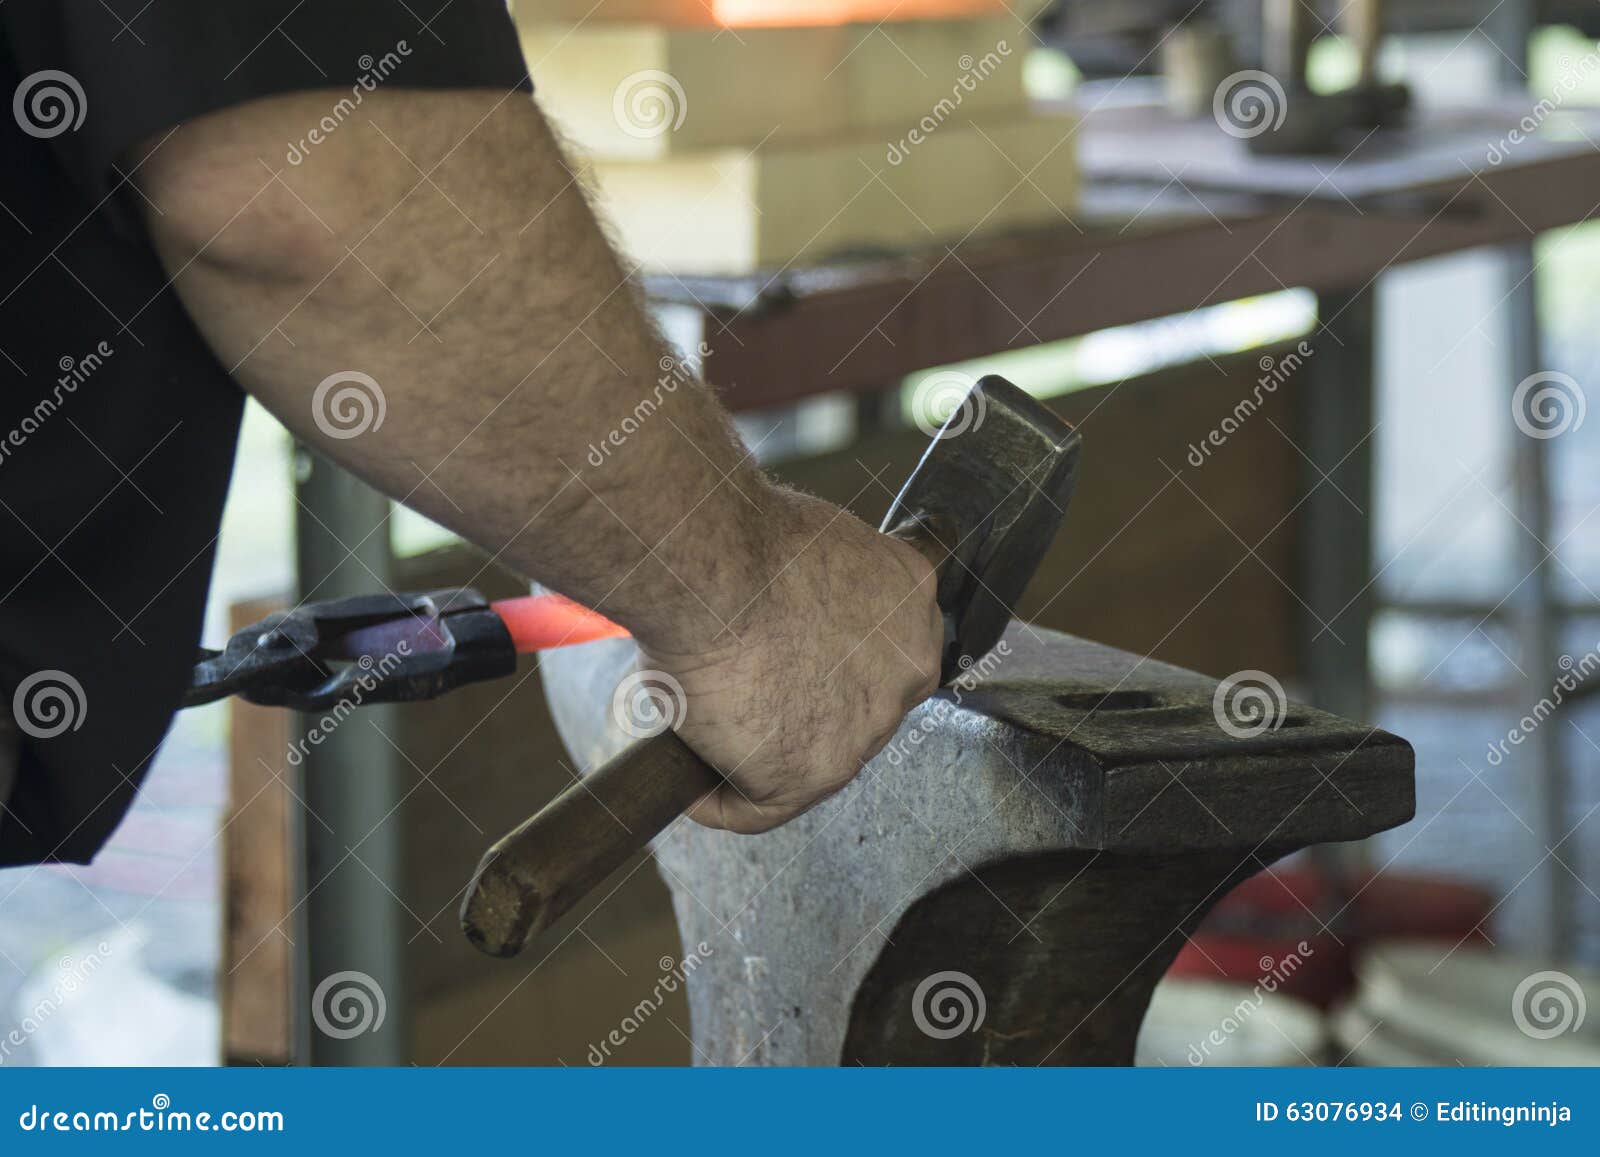 bladesmith with hammer